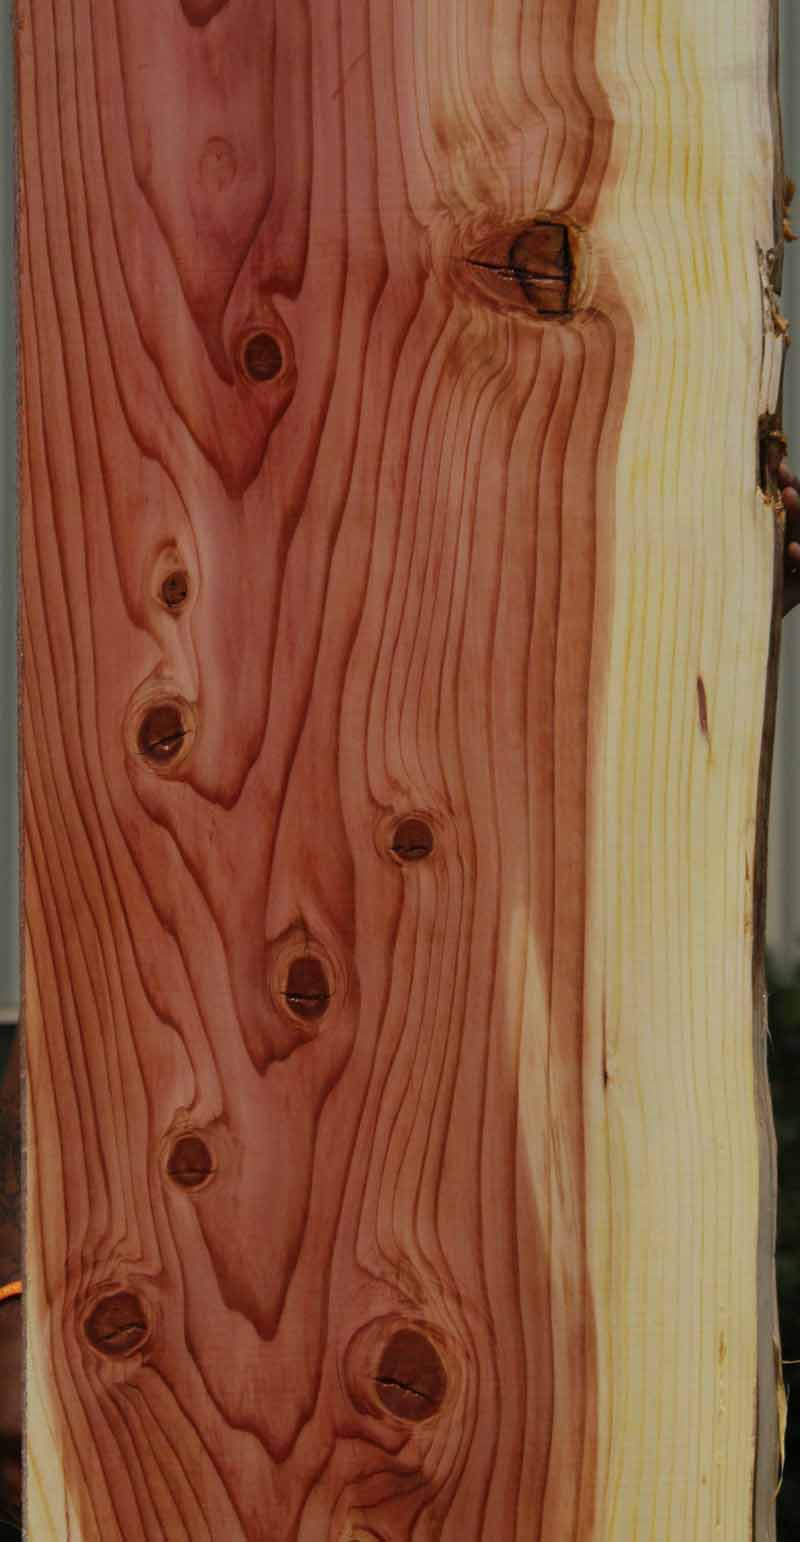 Knotty Sequoia Mantel